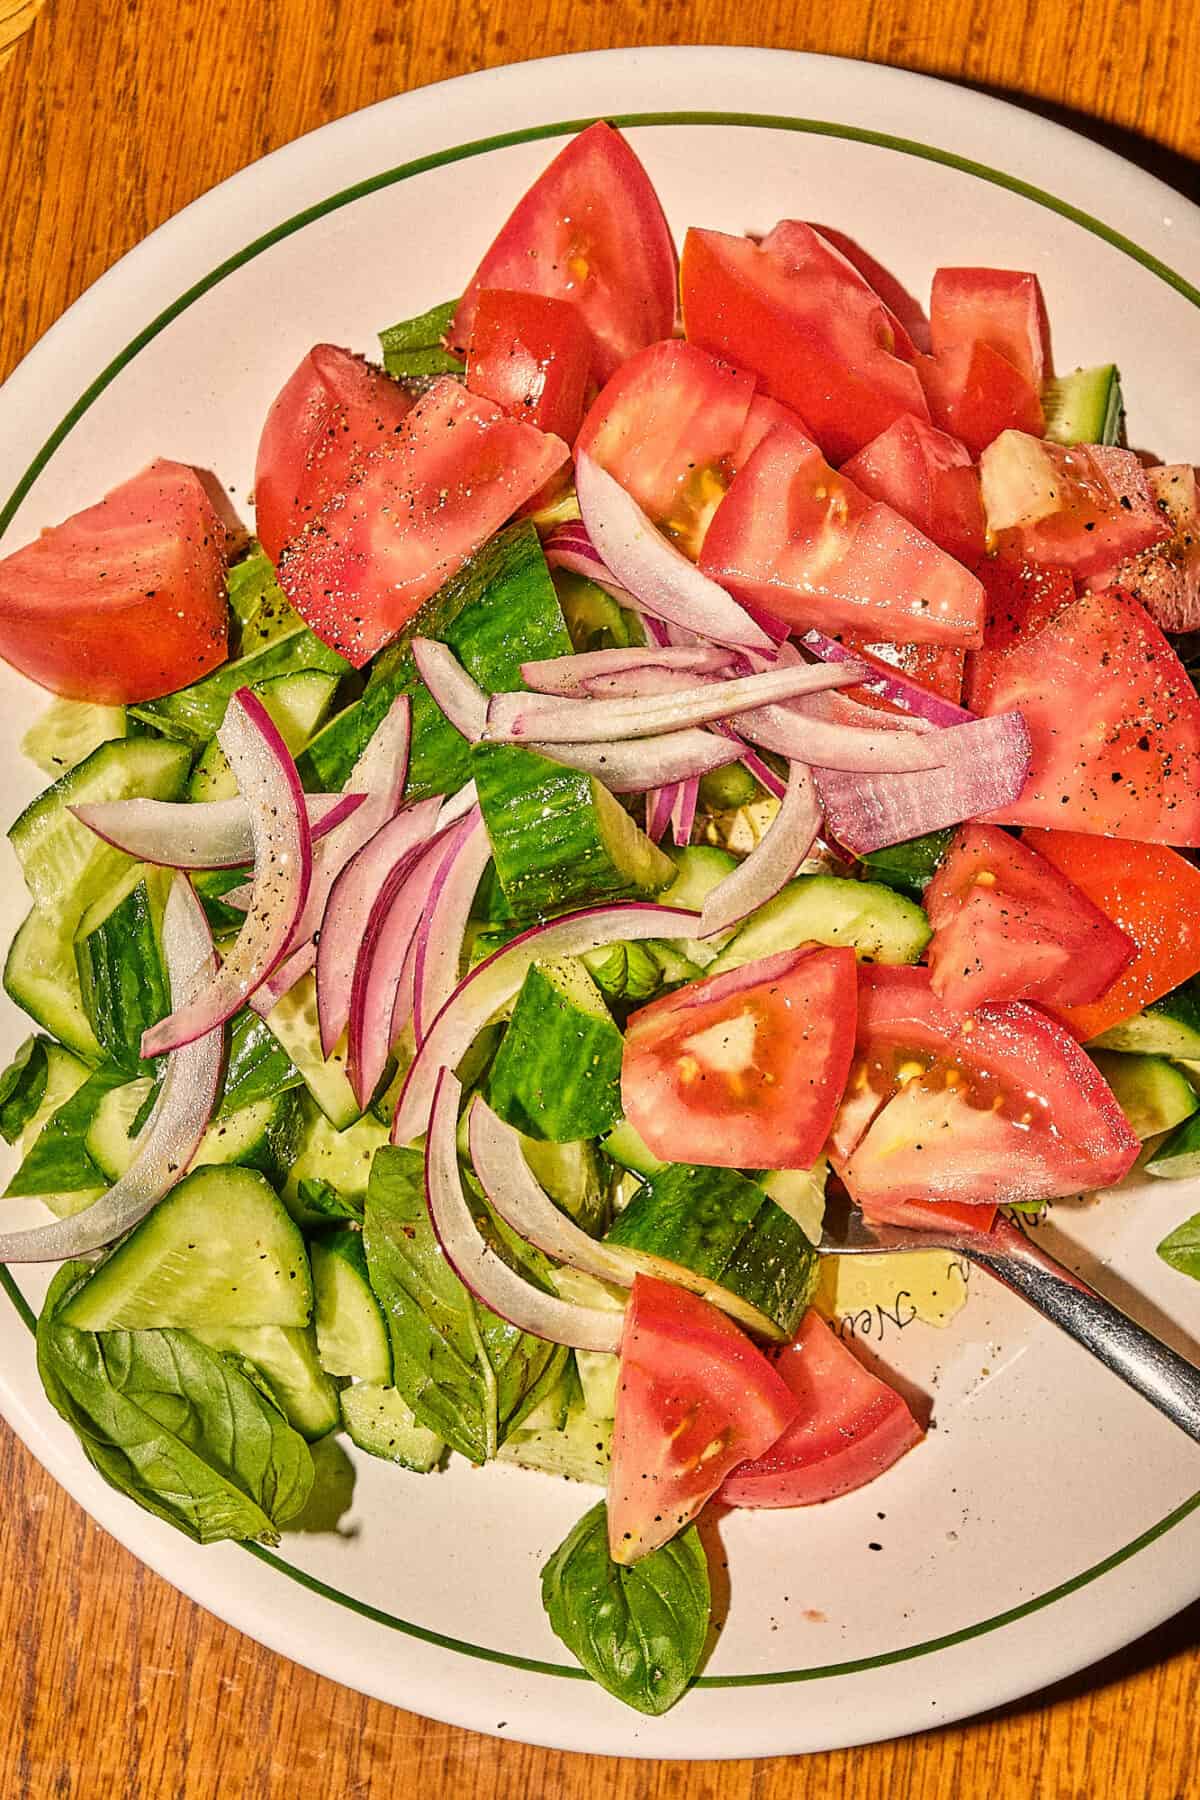 Cucumber and Tomato Salad